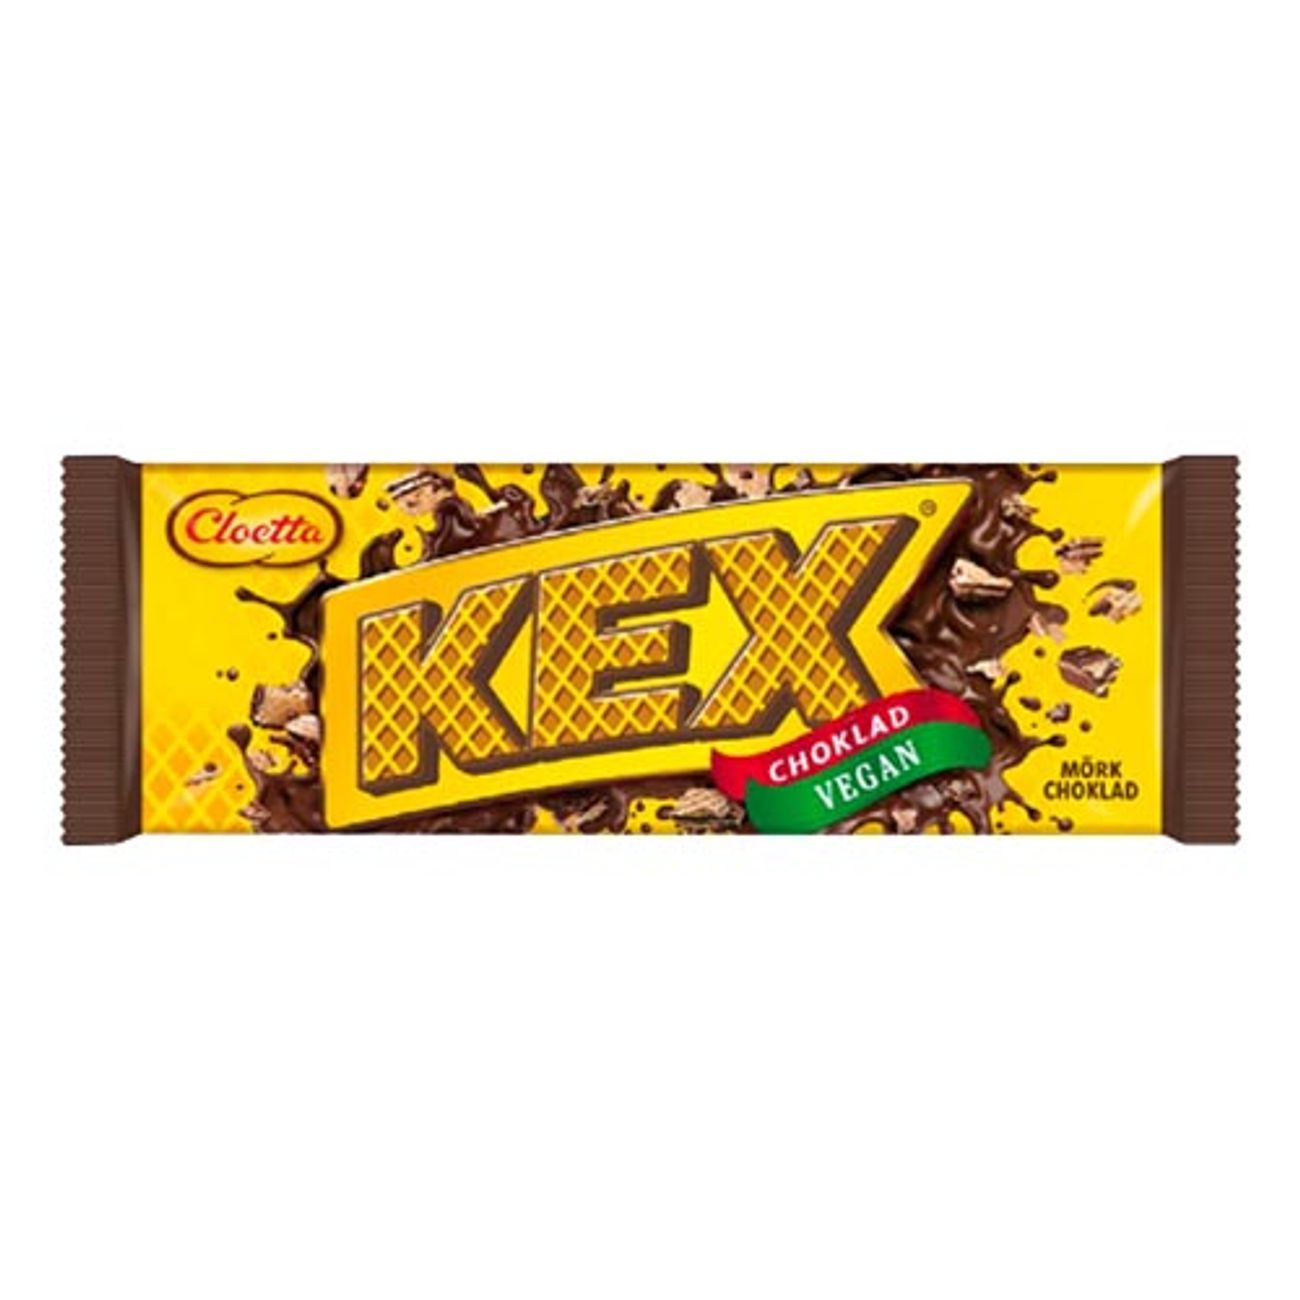 cloetta-kexchoklad-vegan-1